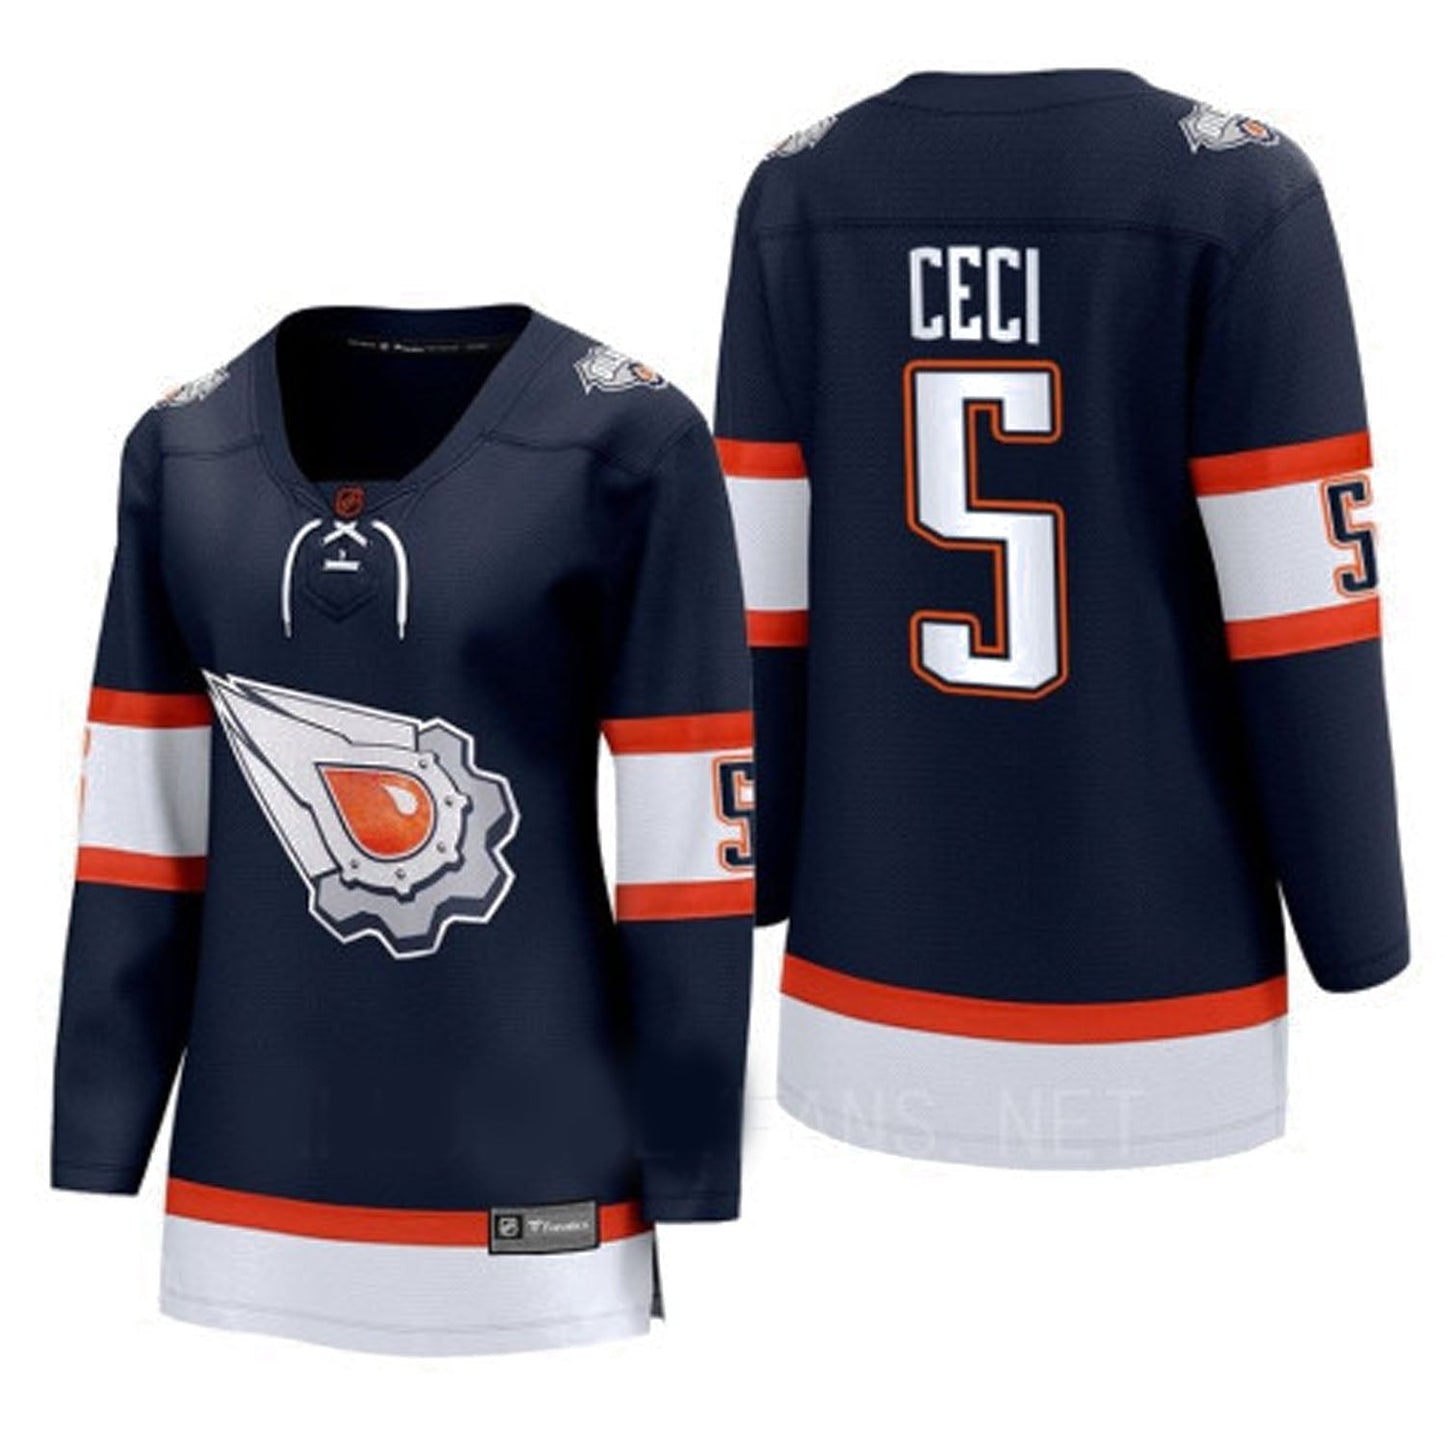 NHL Cody Ceci Edmonton Oilers 5 Jersey